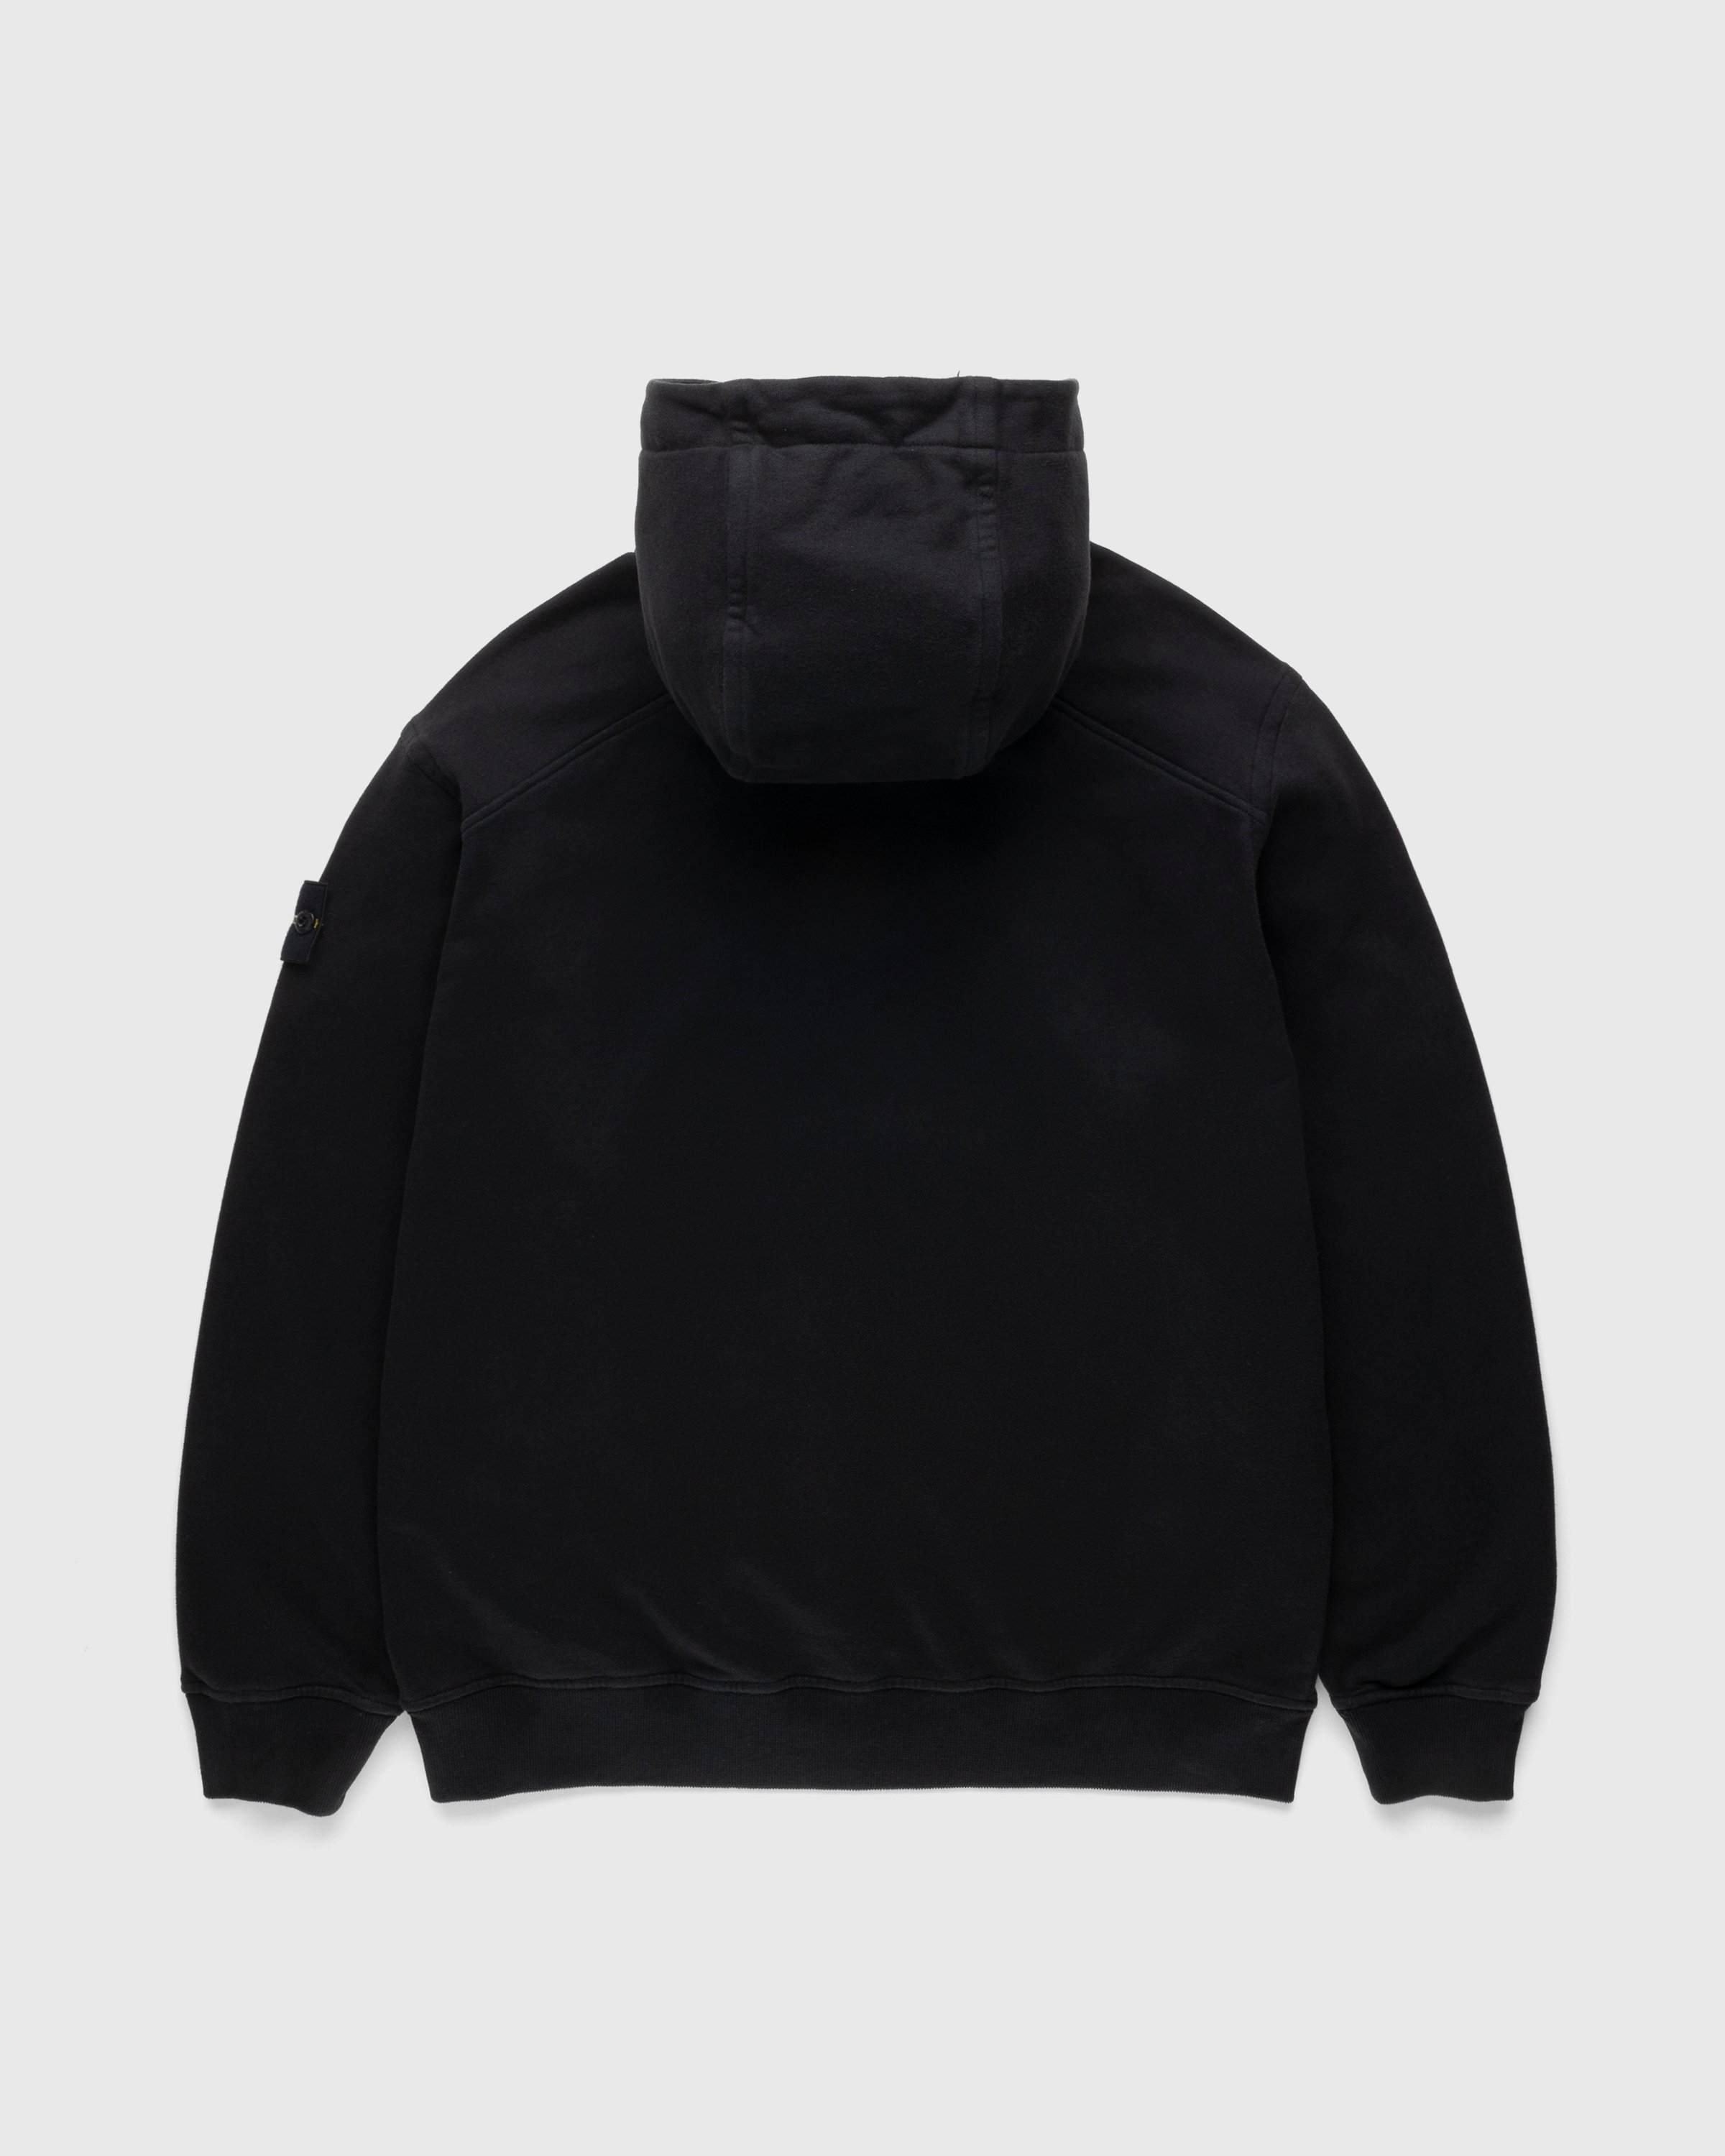 Stone Island - Garment-Dyed Fleece Hoodie Black - Clothing - Black - Image 2